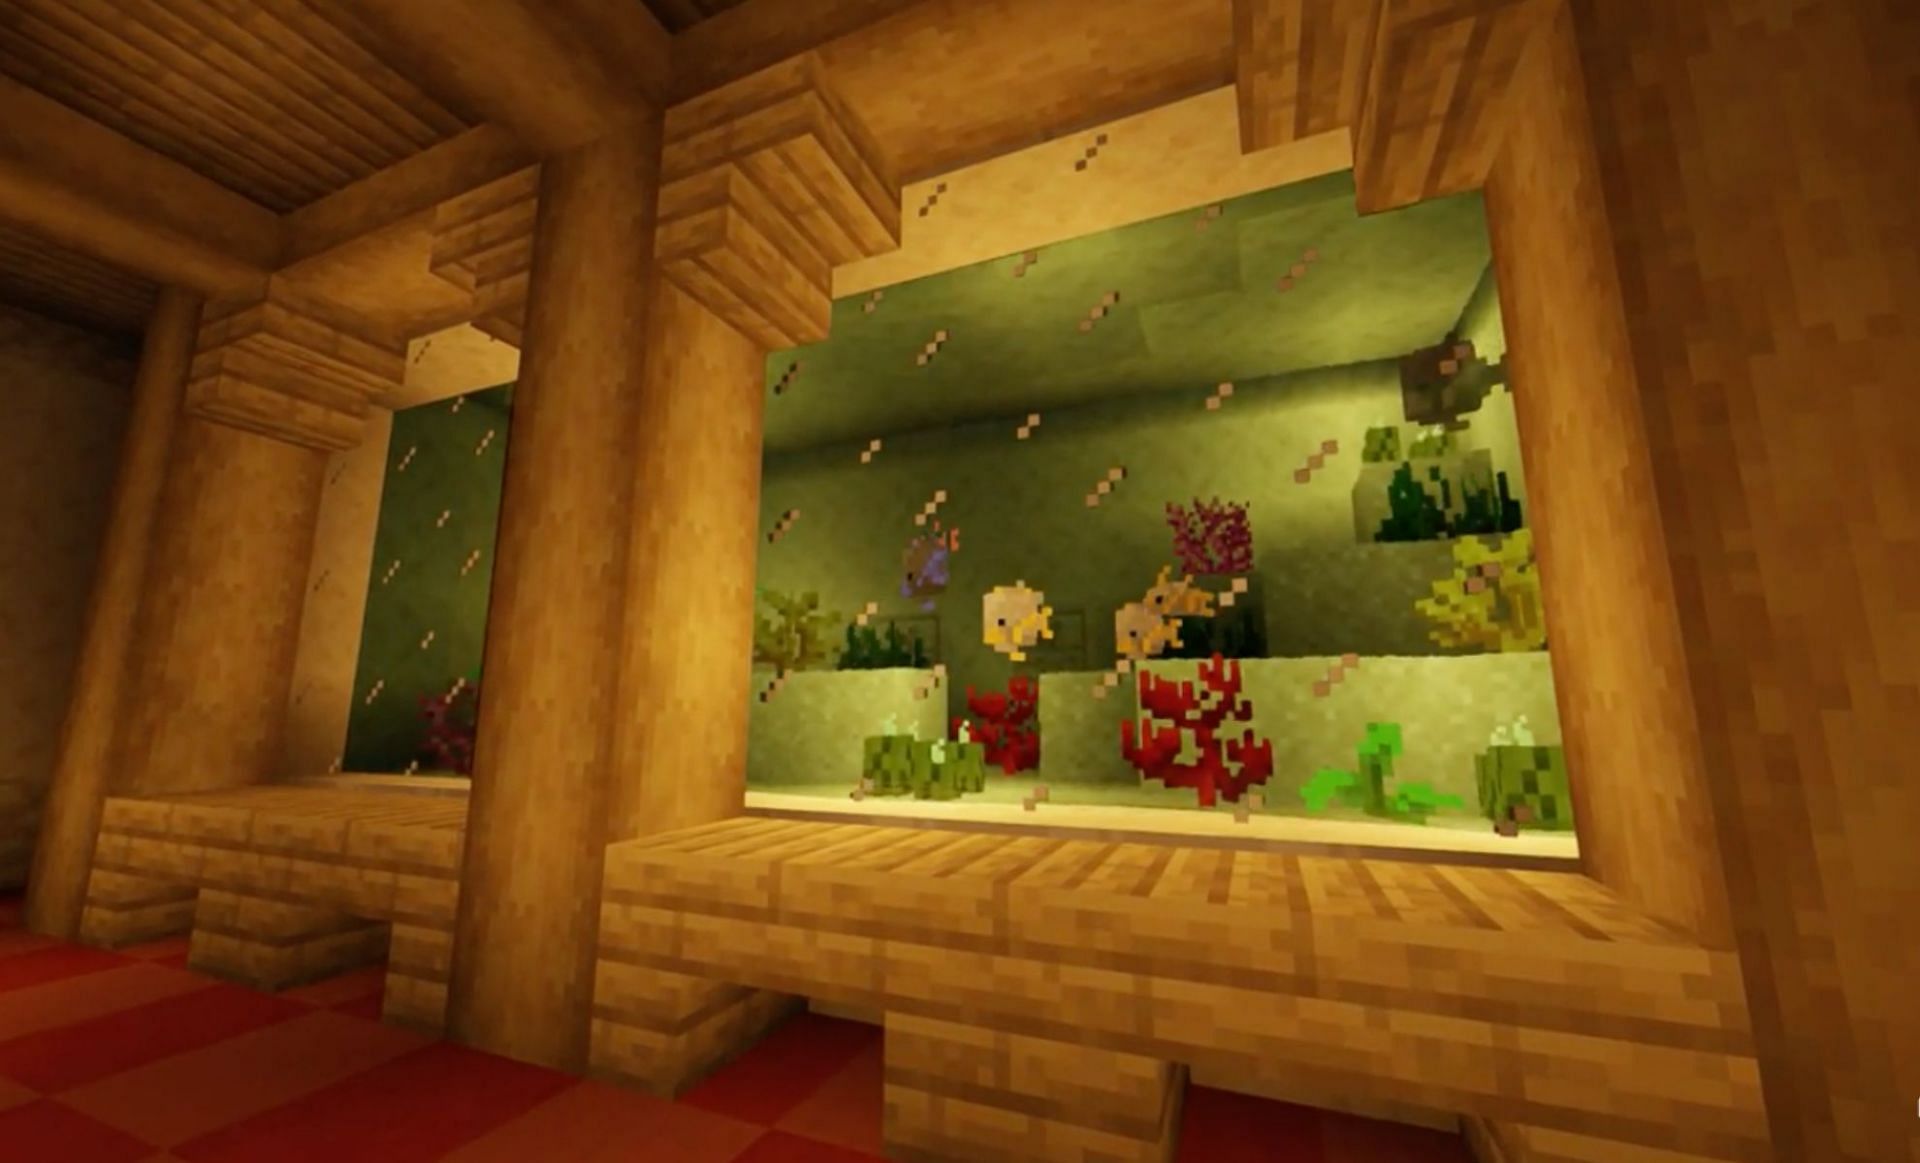 An impressive aquarium (Image via u/Programmeter on Reddit)